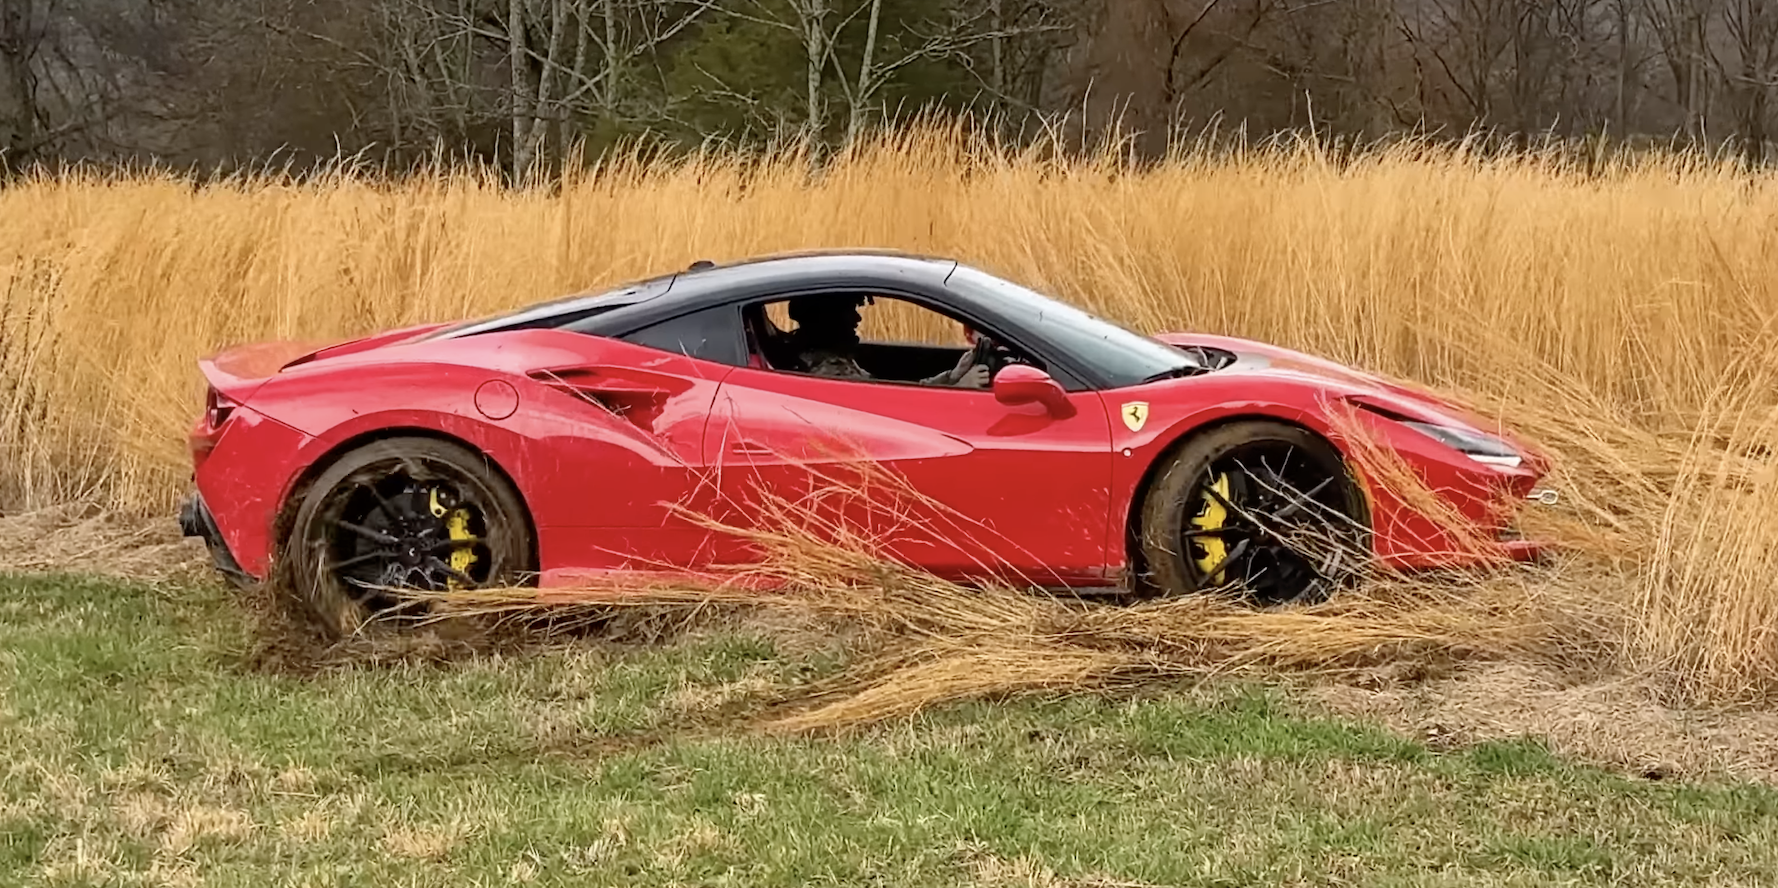 Watch a YouTuber Smash a Fence, Thrash on Gravel, and Climb Dirt Hills in Ferrari F8